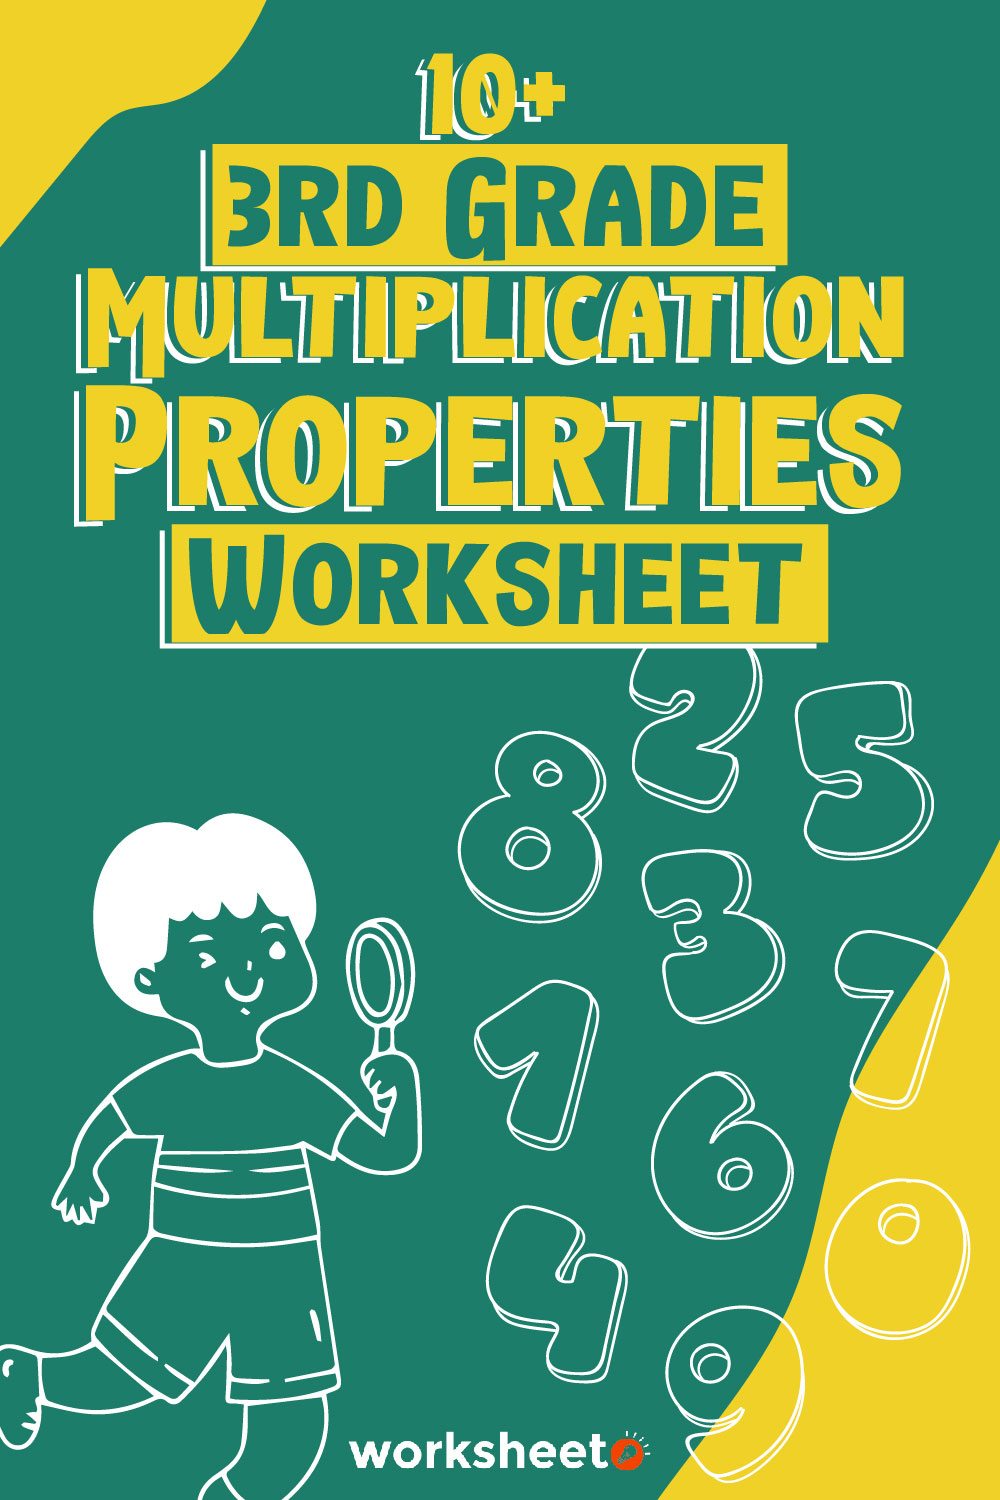 17 Images of 3rd Grade Multiplication Properties Worksheet